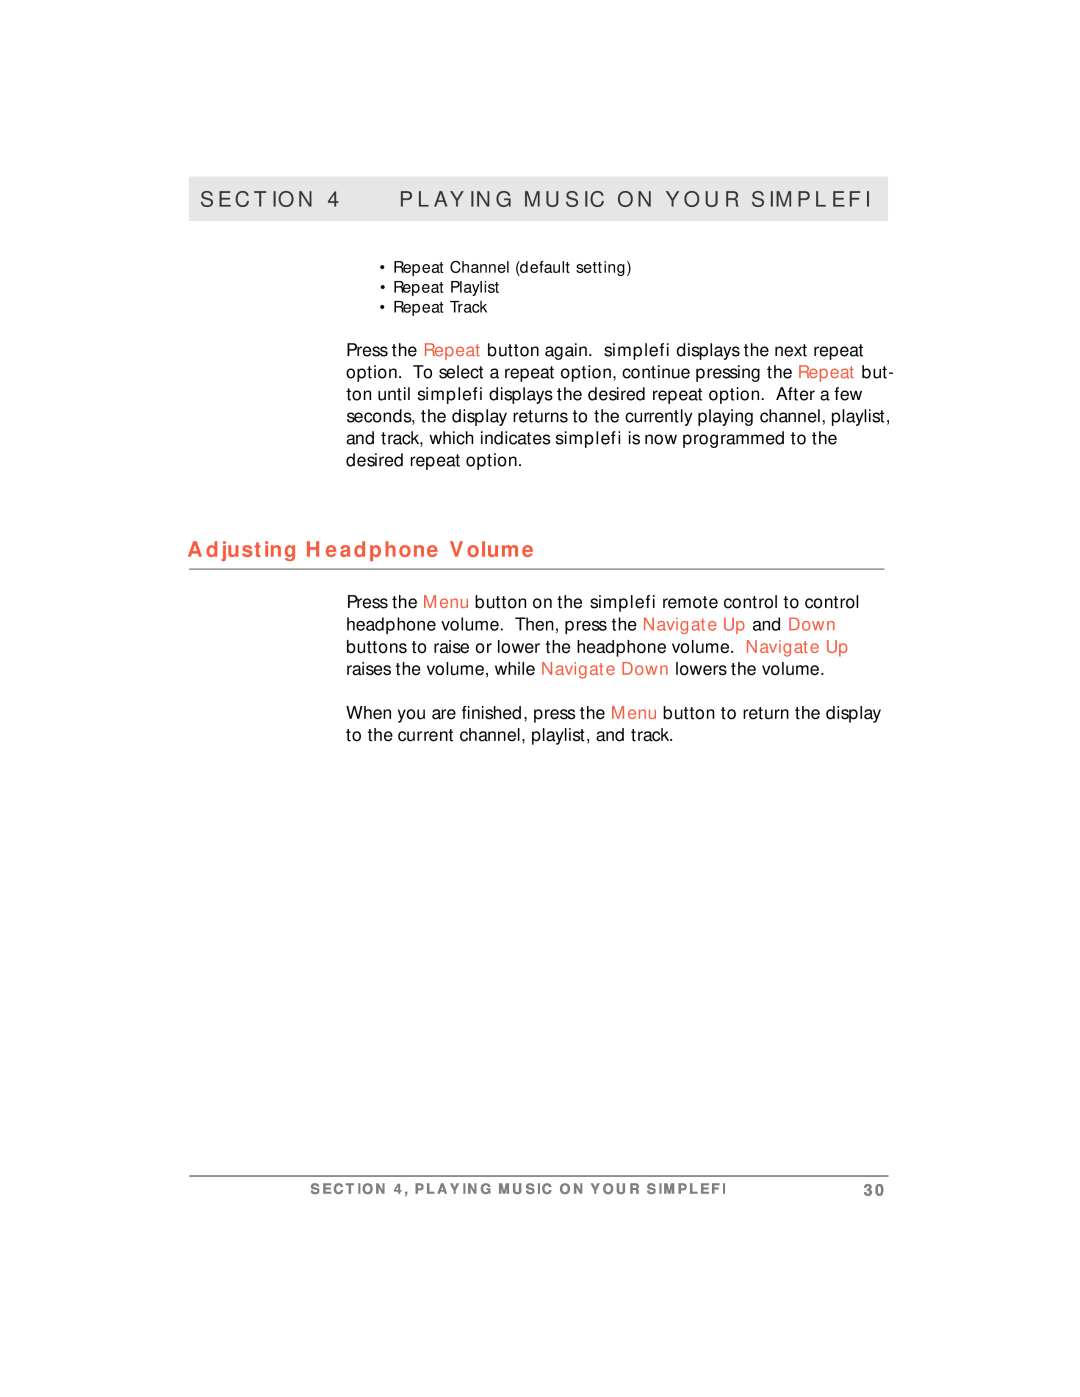 Motorola simplefi manual Adjusting Headphone Volume, Playing Music On Your Simplefi, Repeat Track 